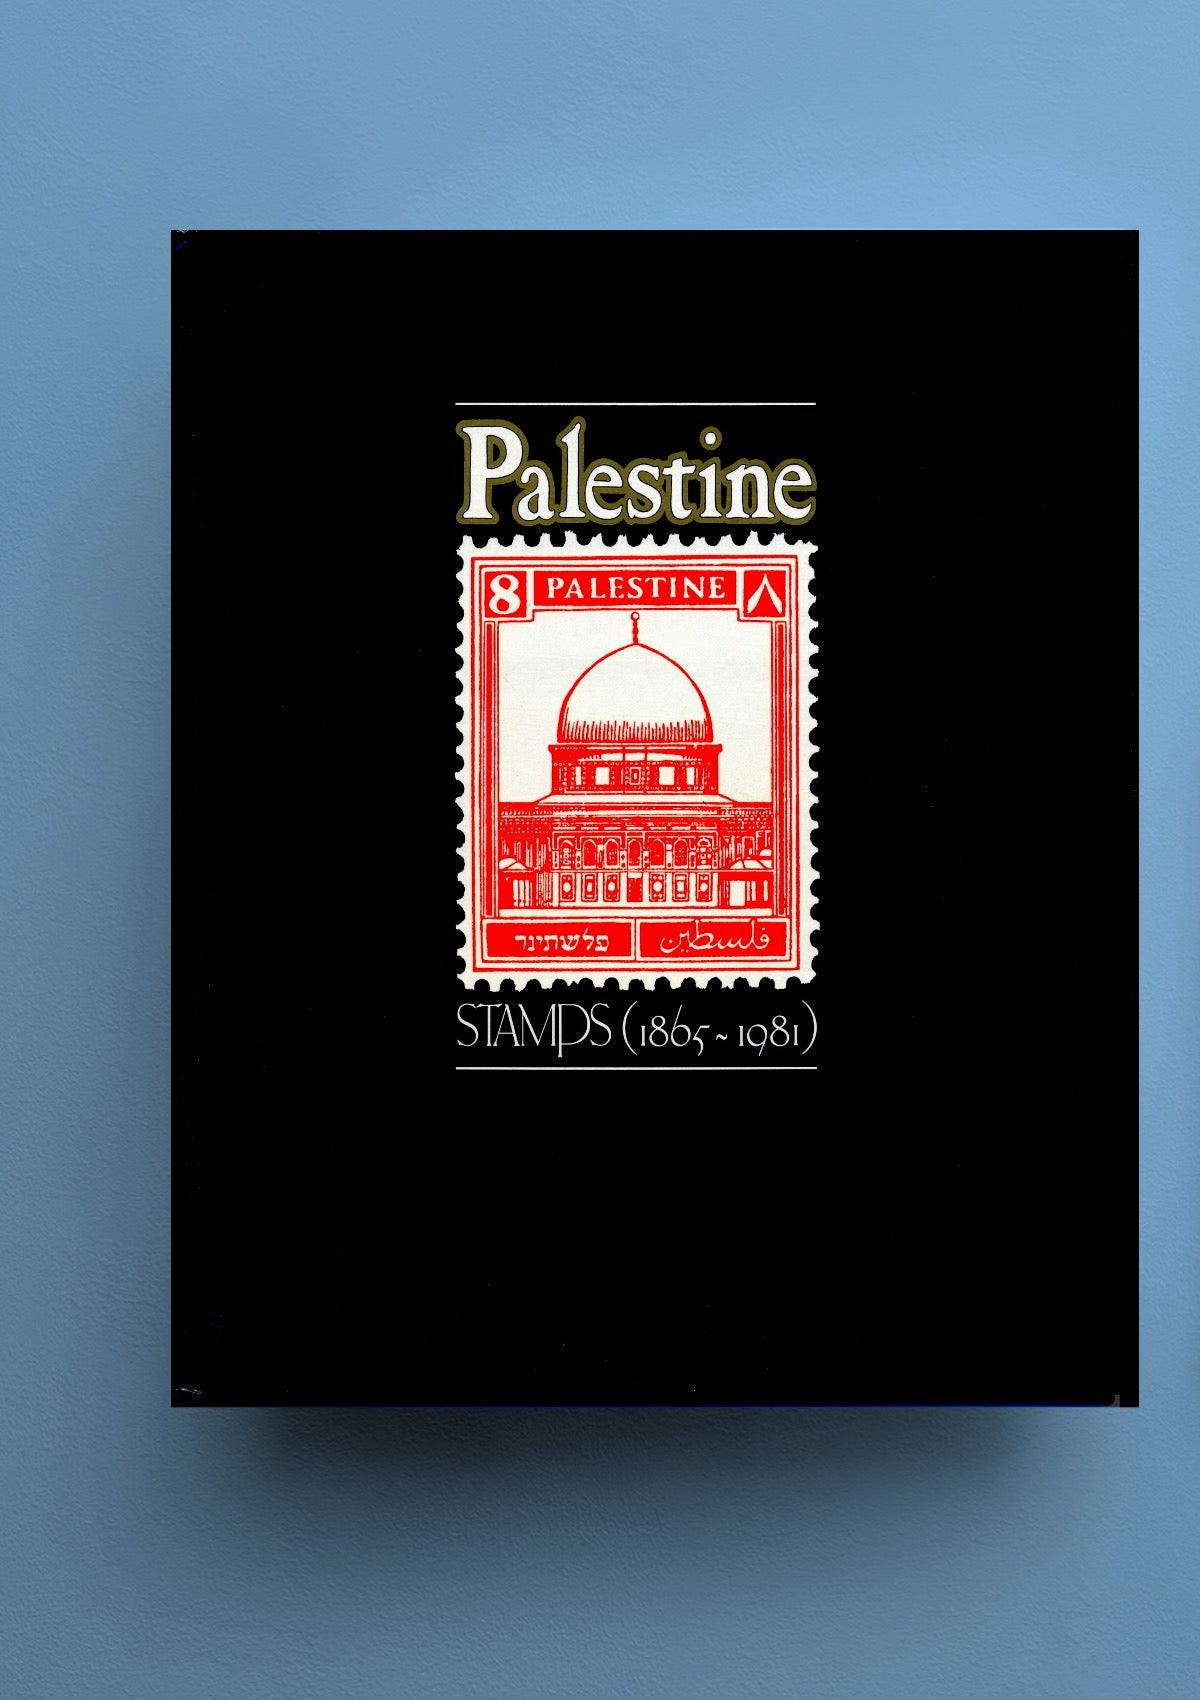 Palestine Stamps (1865 - 1981)